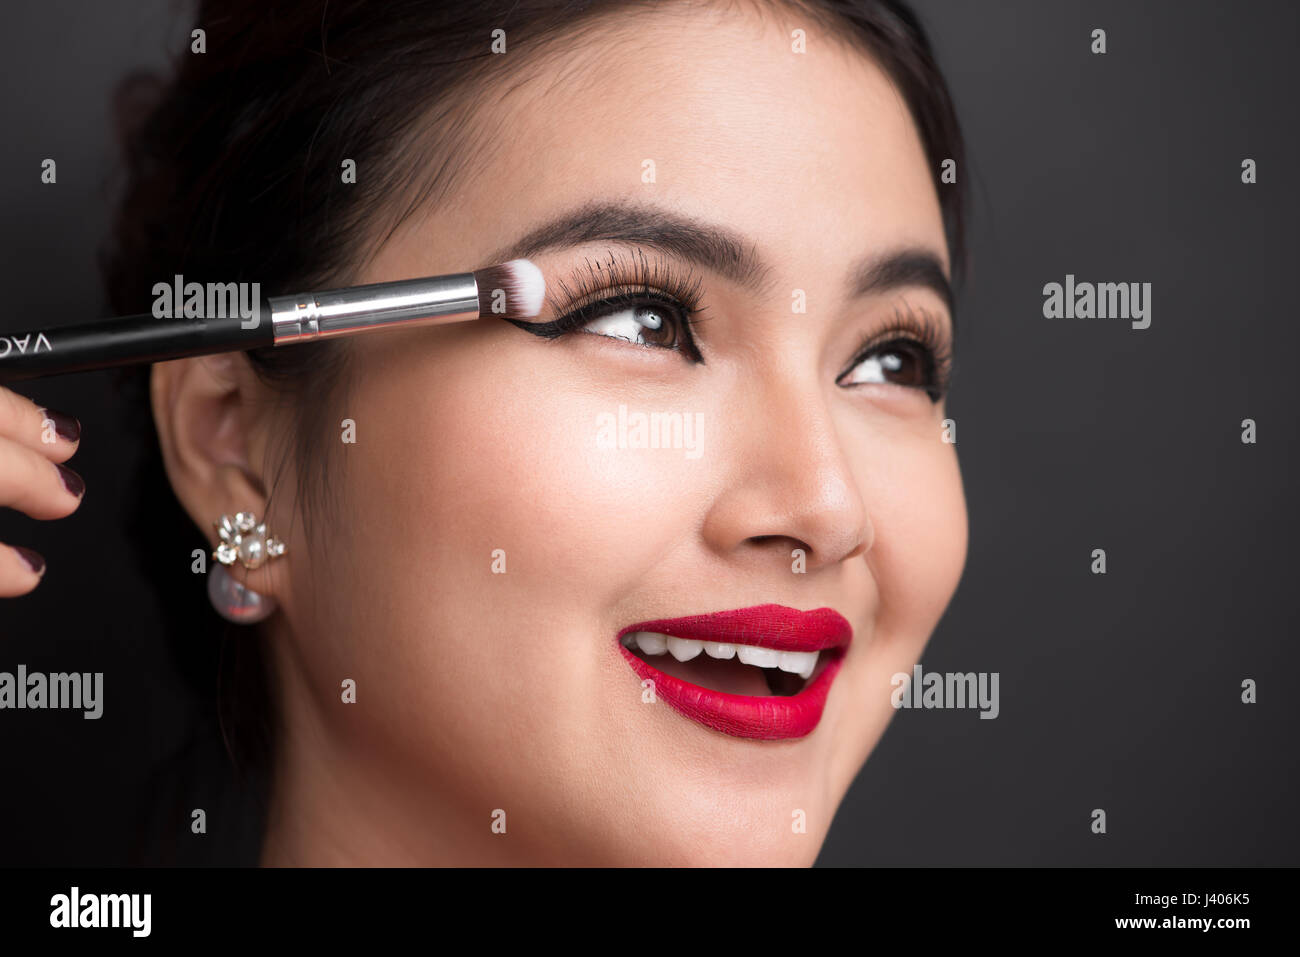 Close up of hand of asian woman applying eyeshadow on female eyelid. Stock Photo